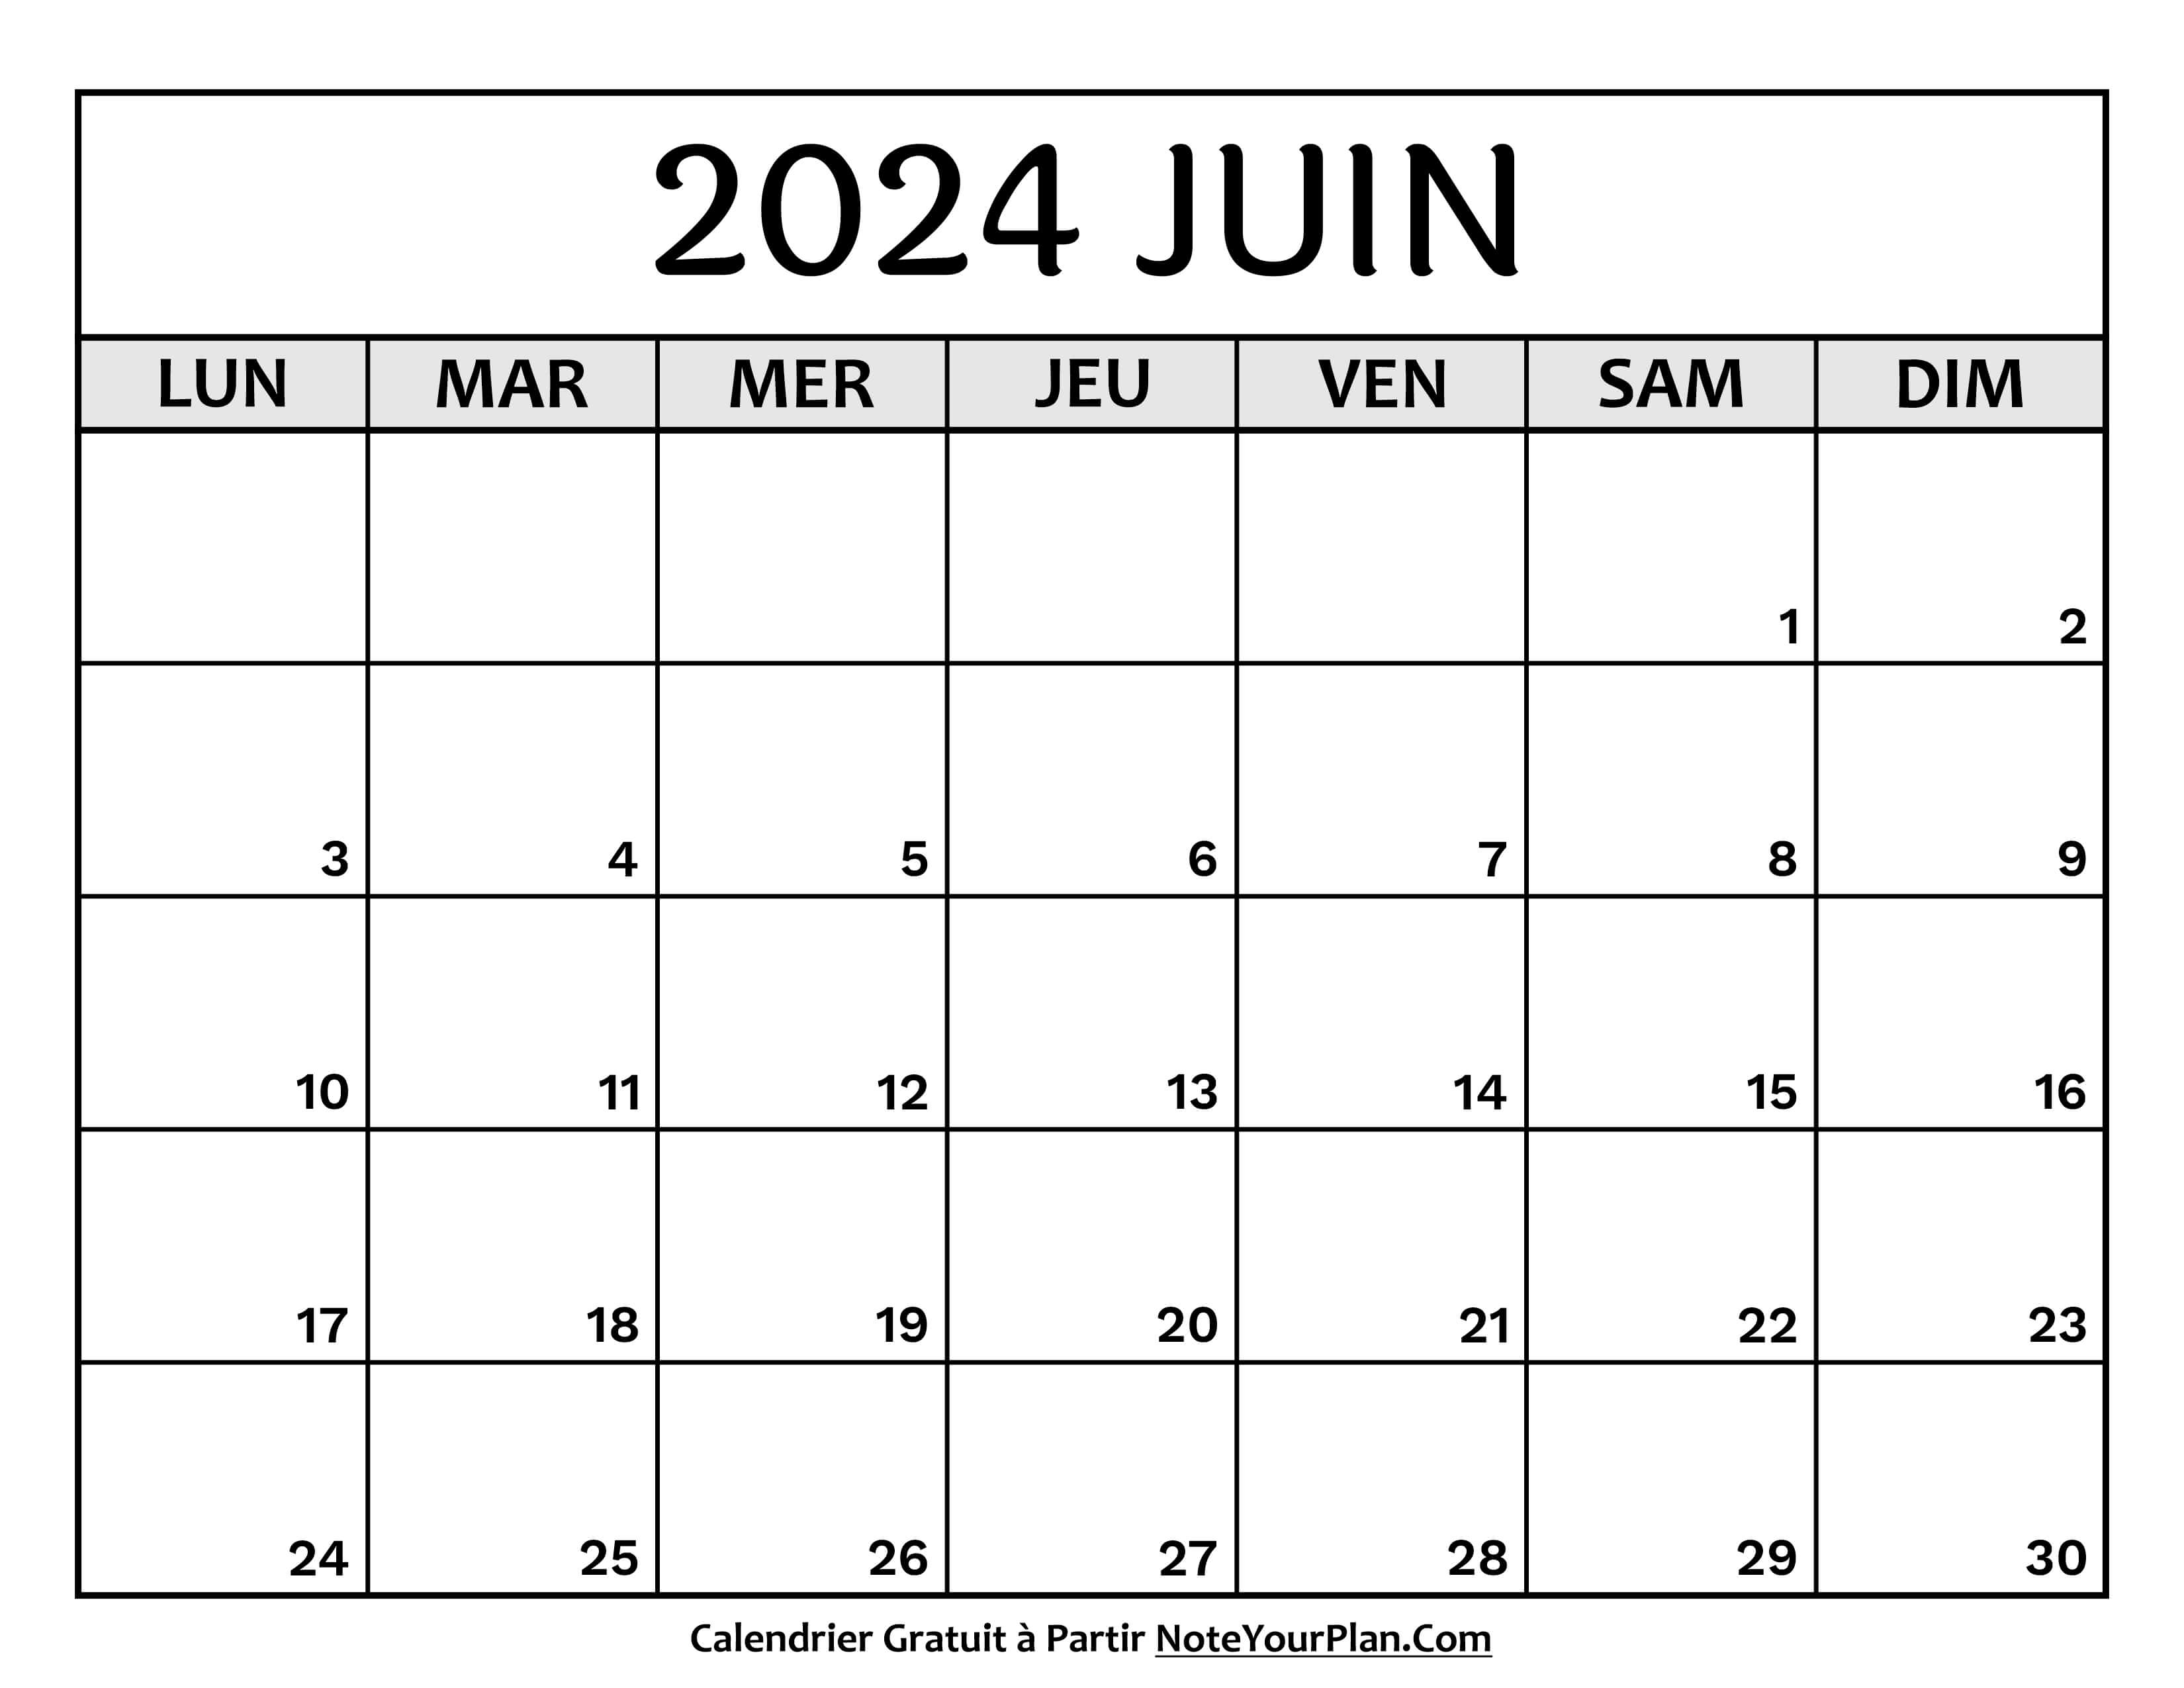 Calendrier Juin 2024 à Imprimer